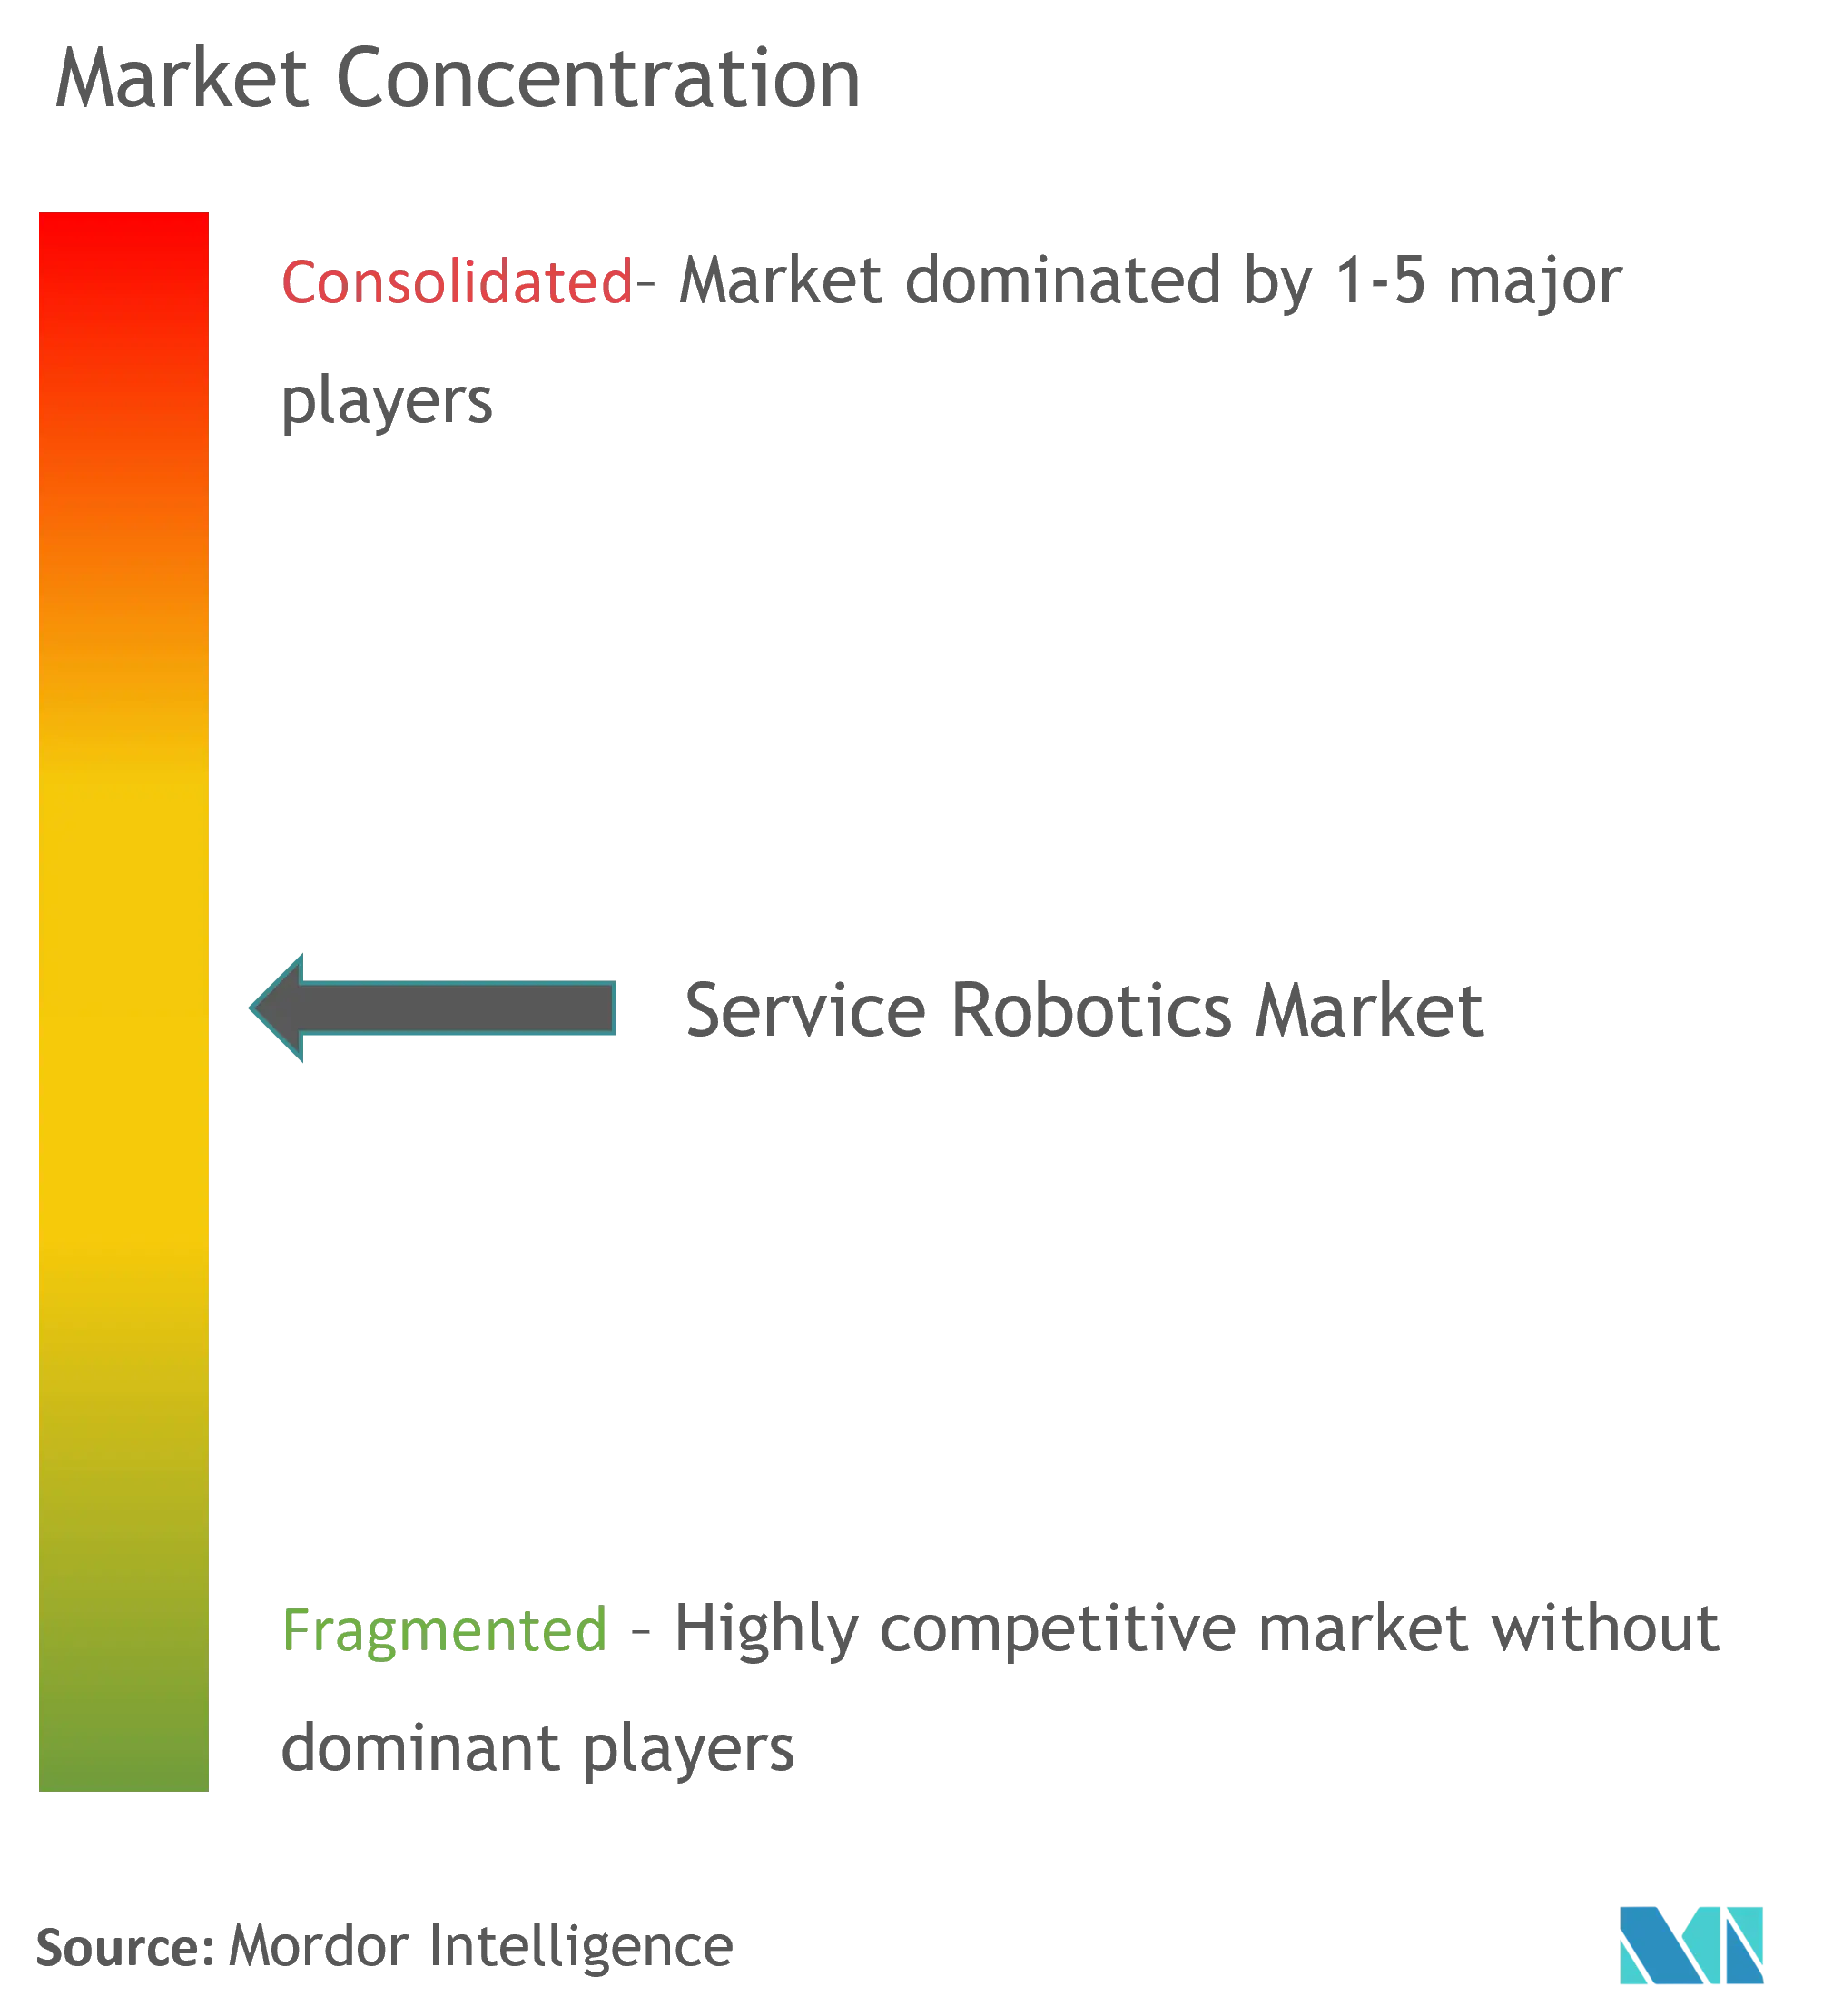 Service Robotics Market Concentration